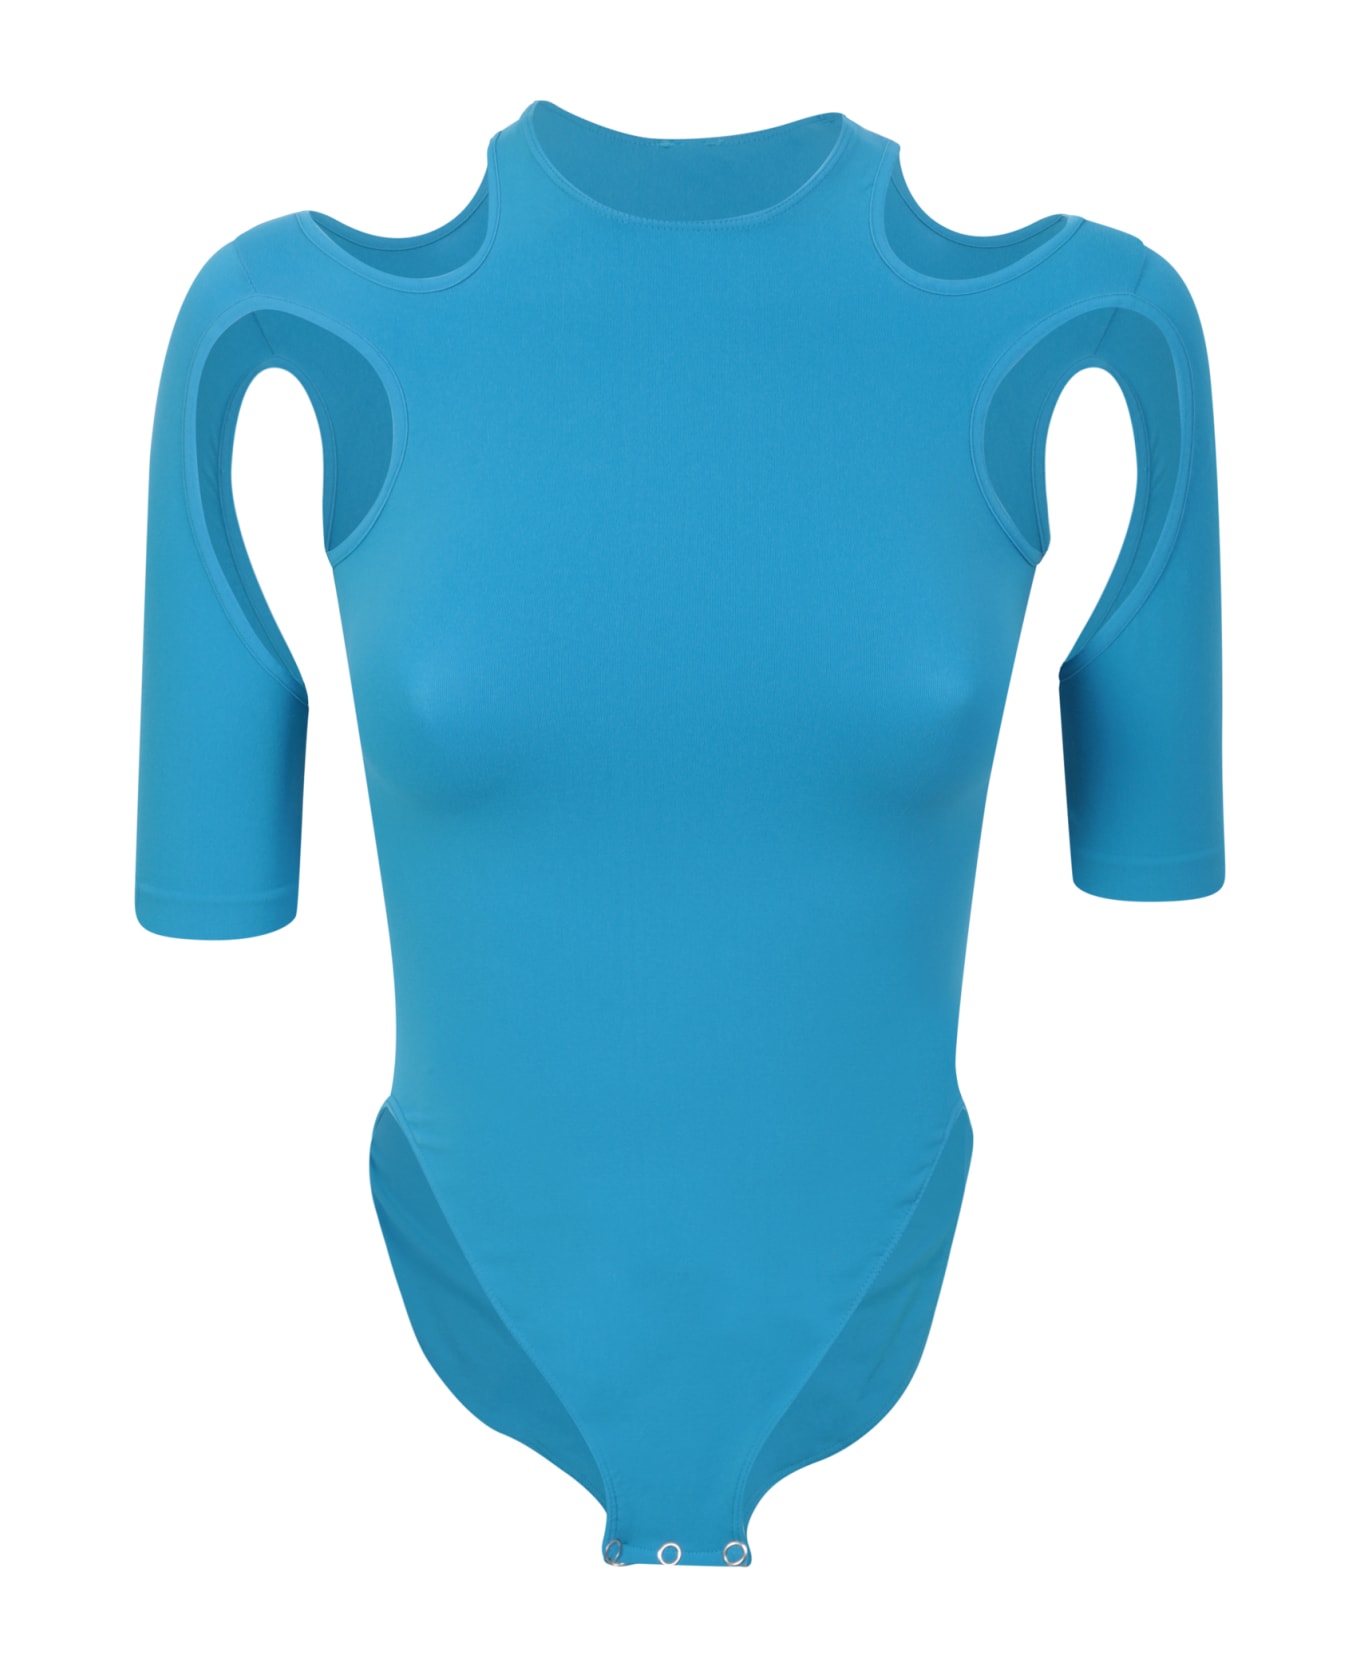 ANDREĀDAMO Jersey Sky Blue Bodysuit - Blue ボディスーツ